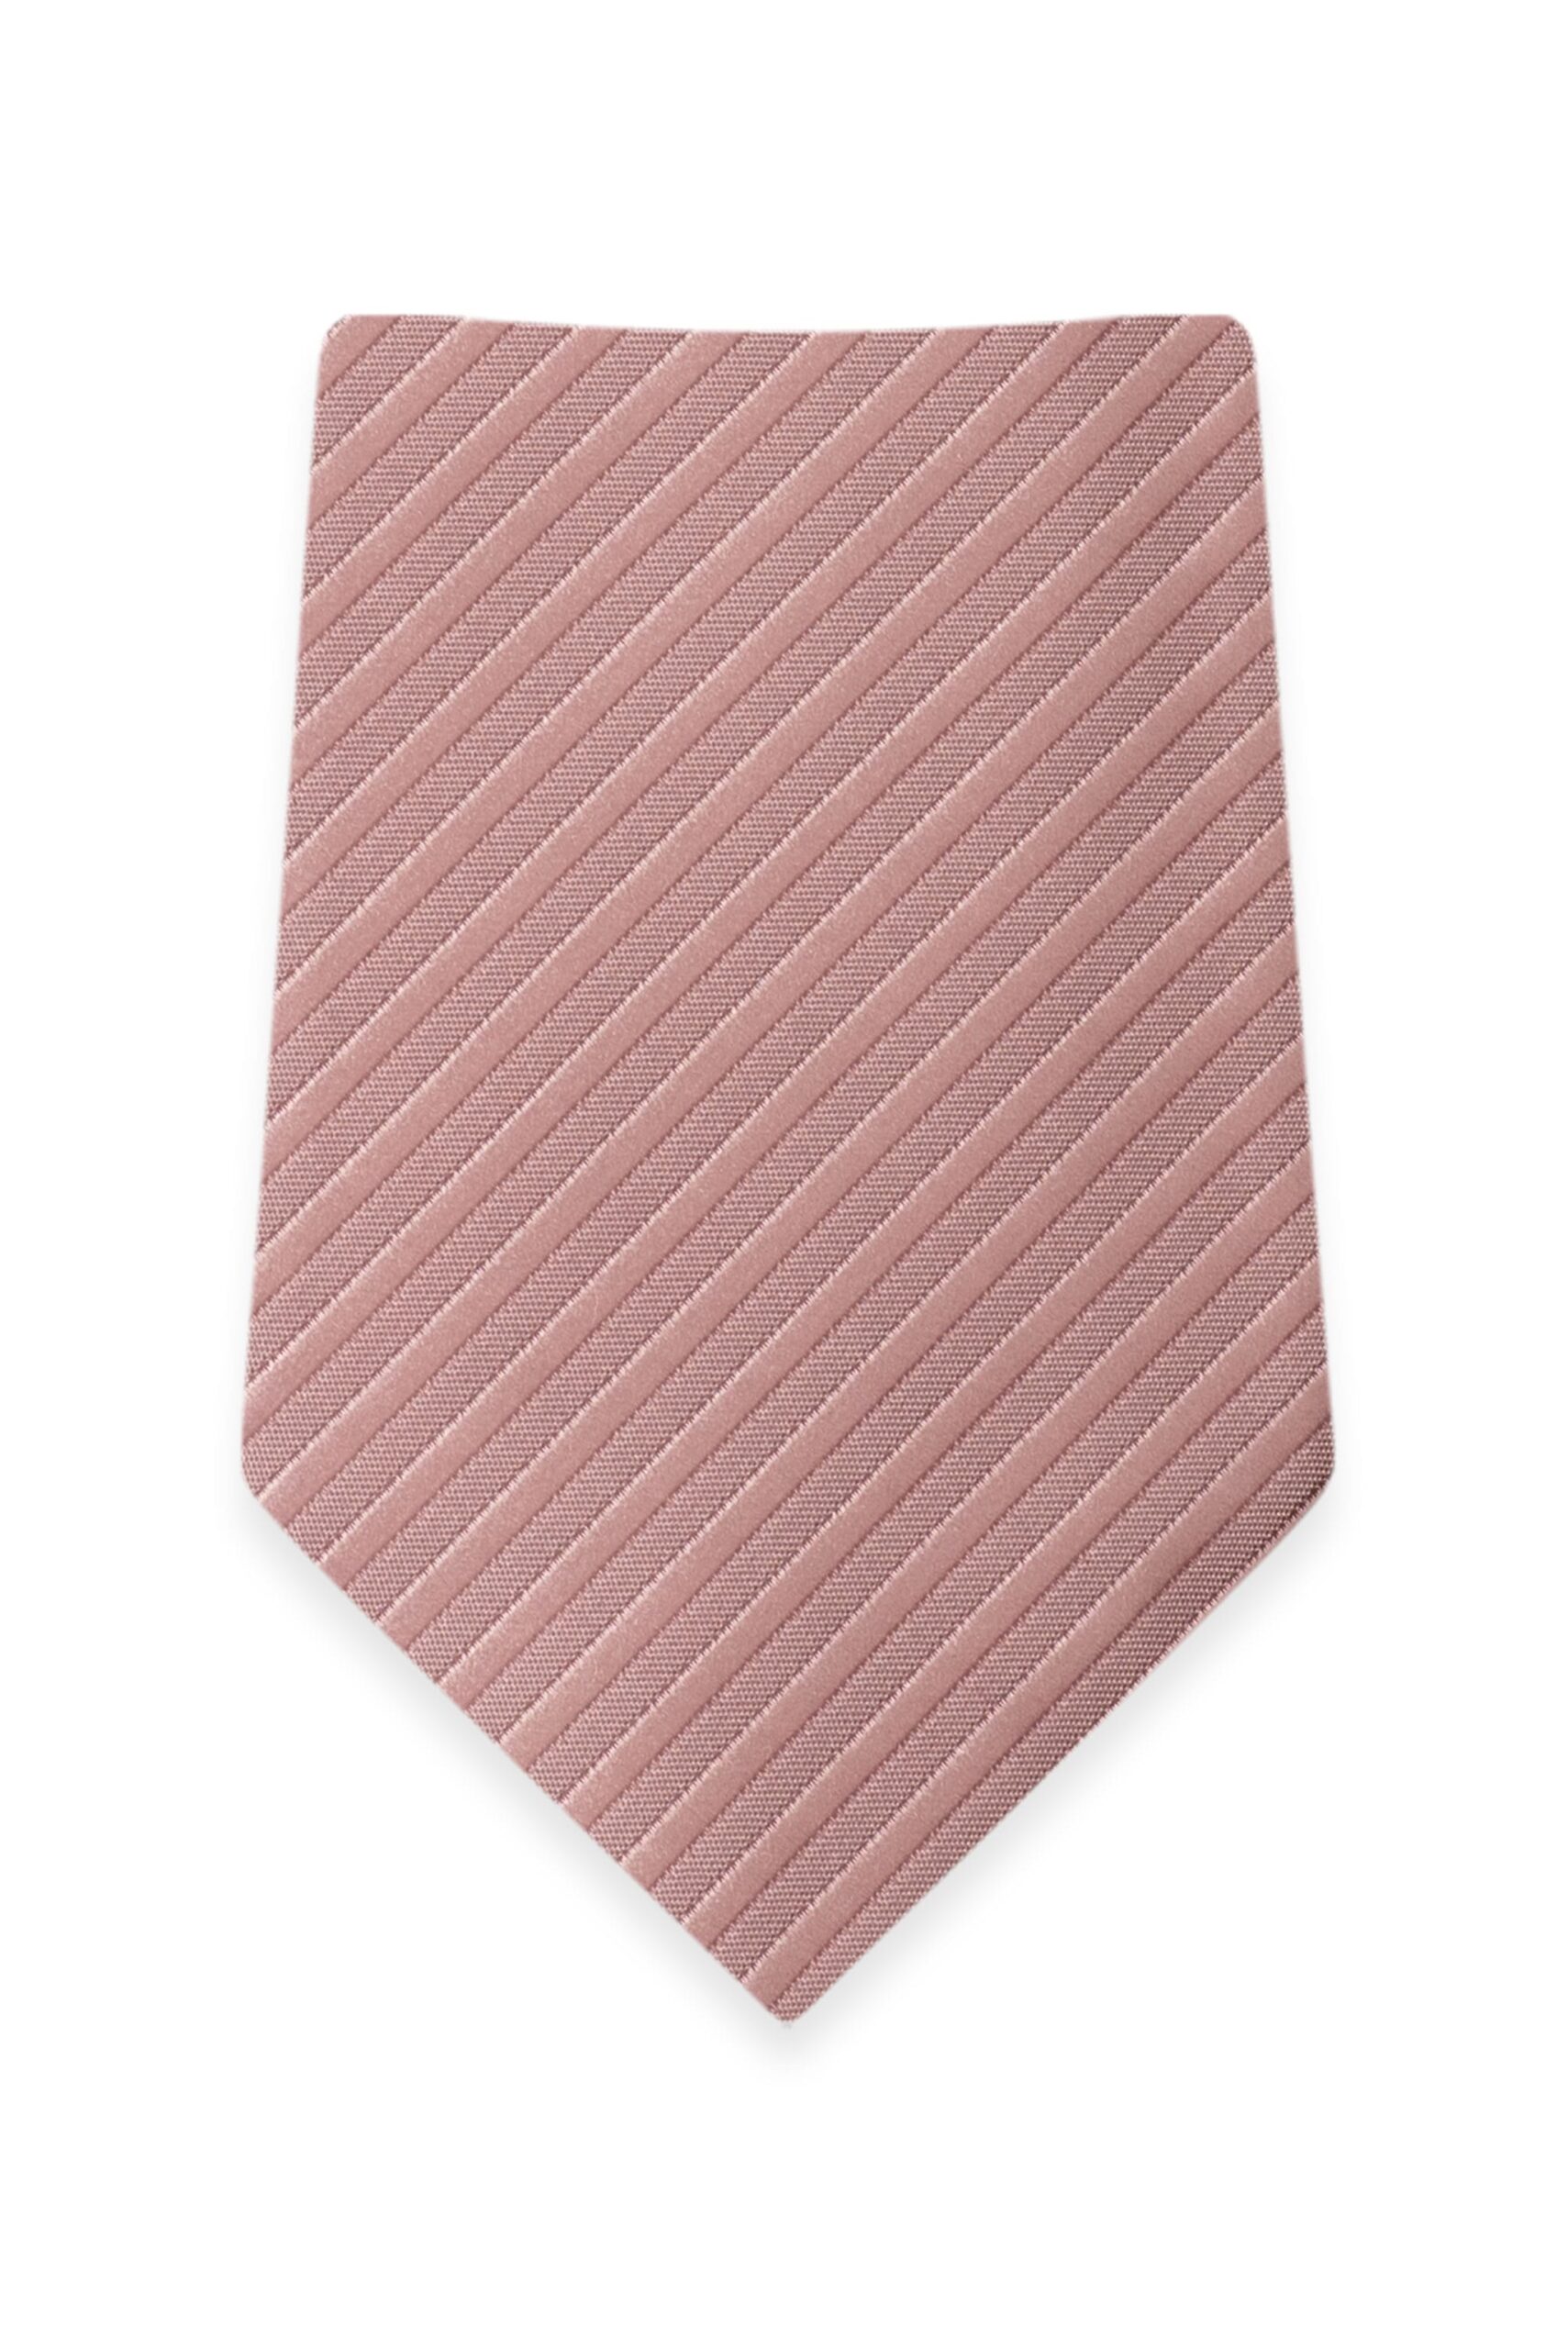 Striped First Blush Self-Tie Windsor Tie 1